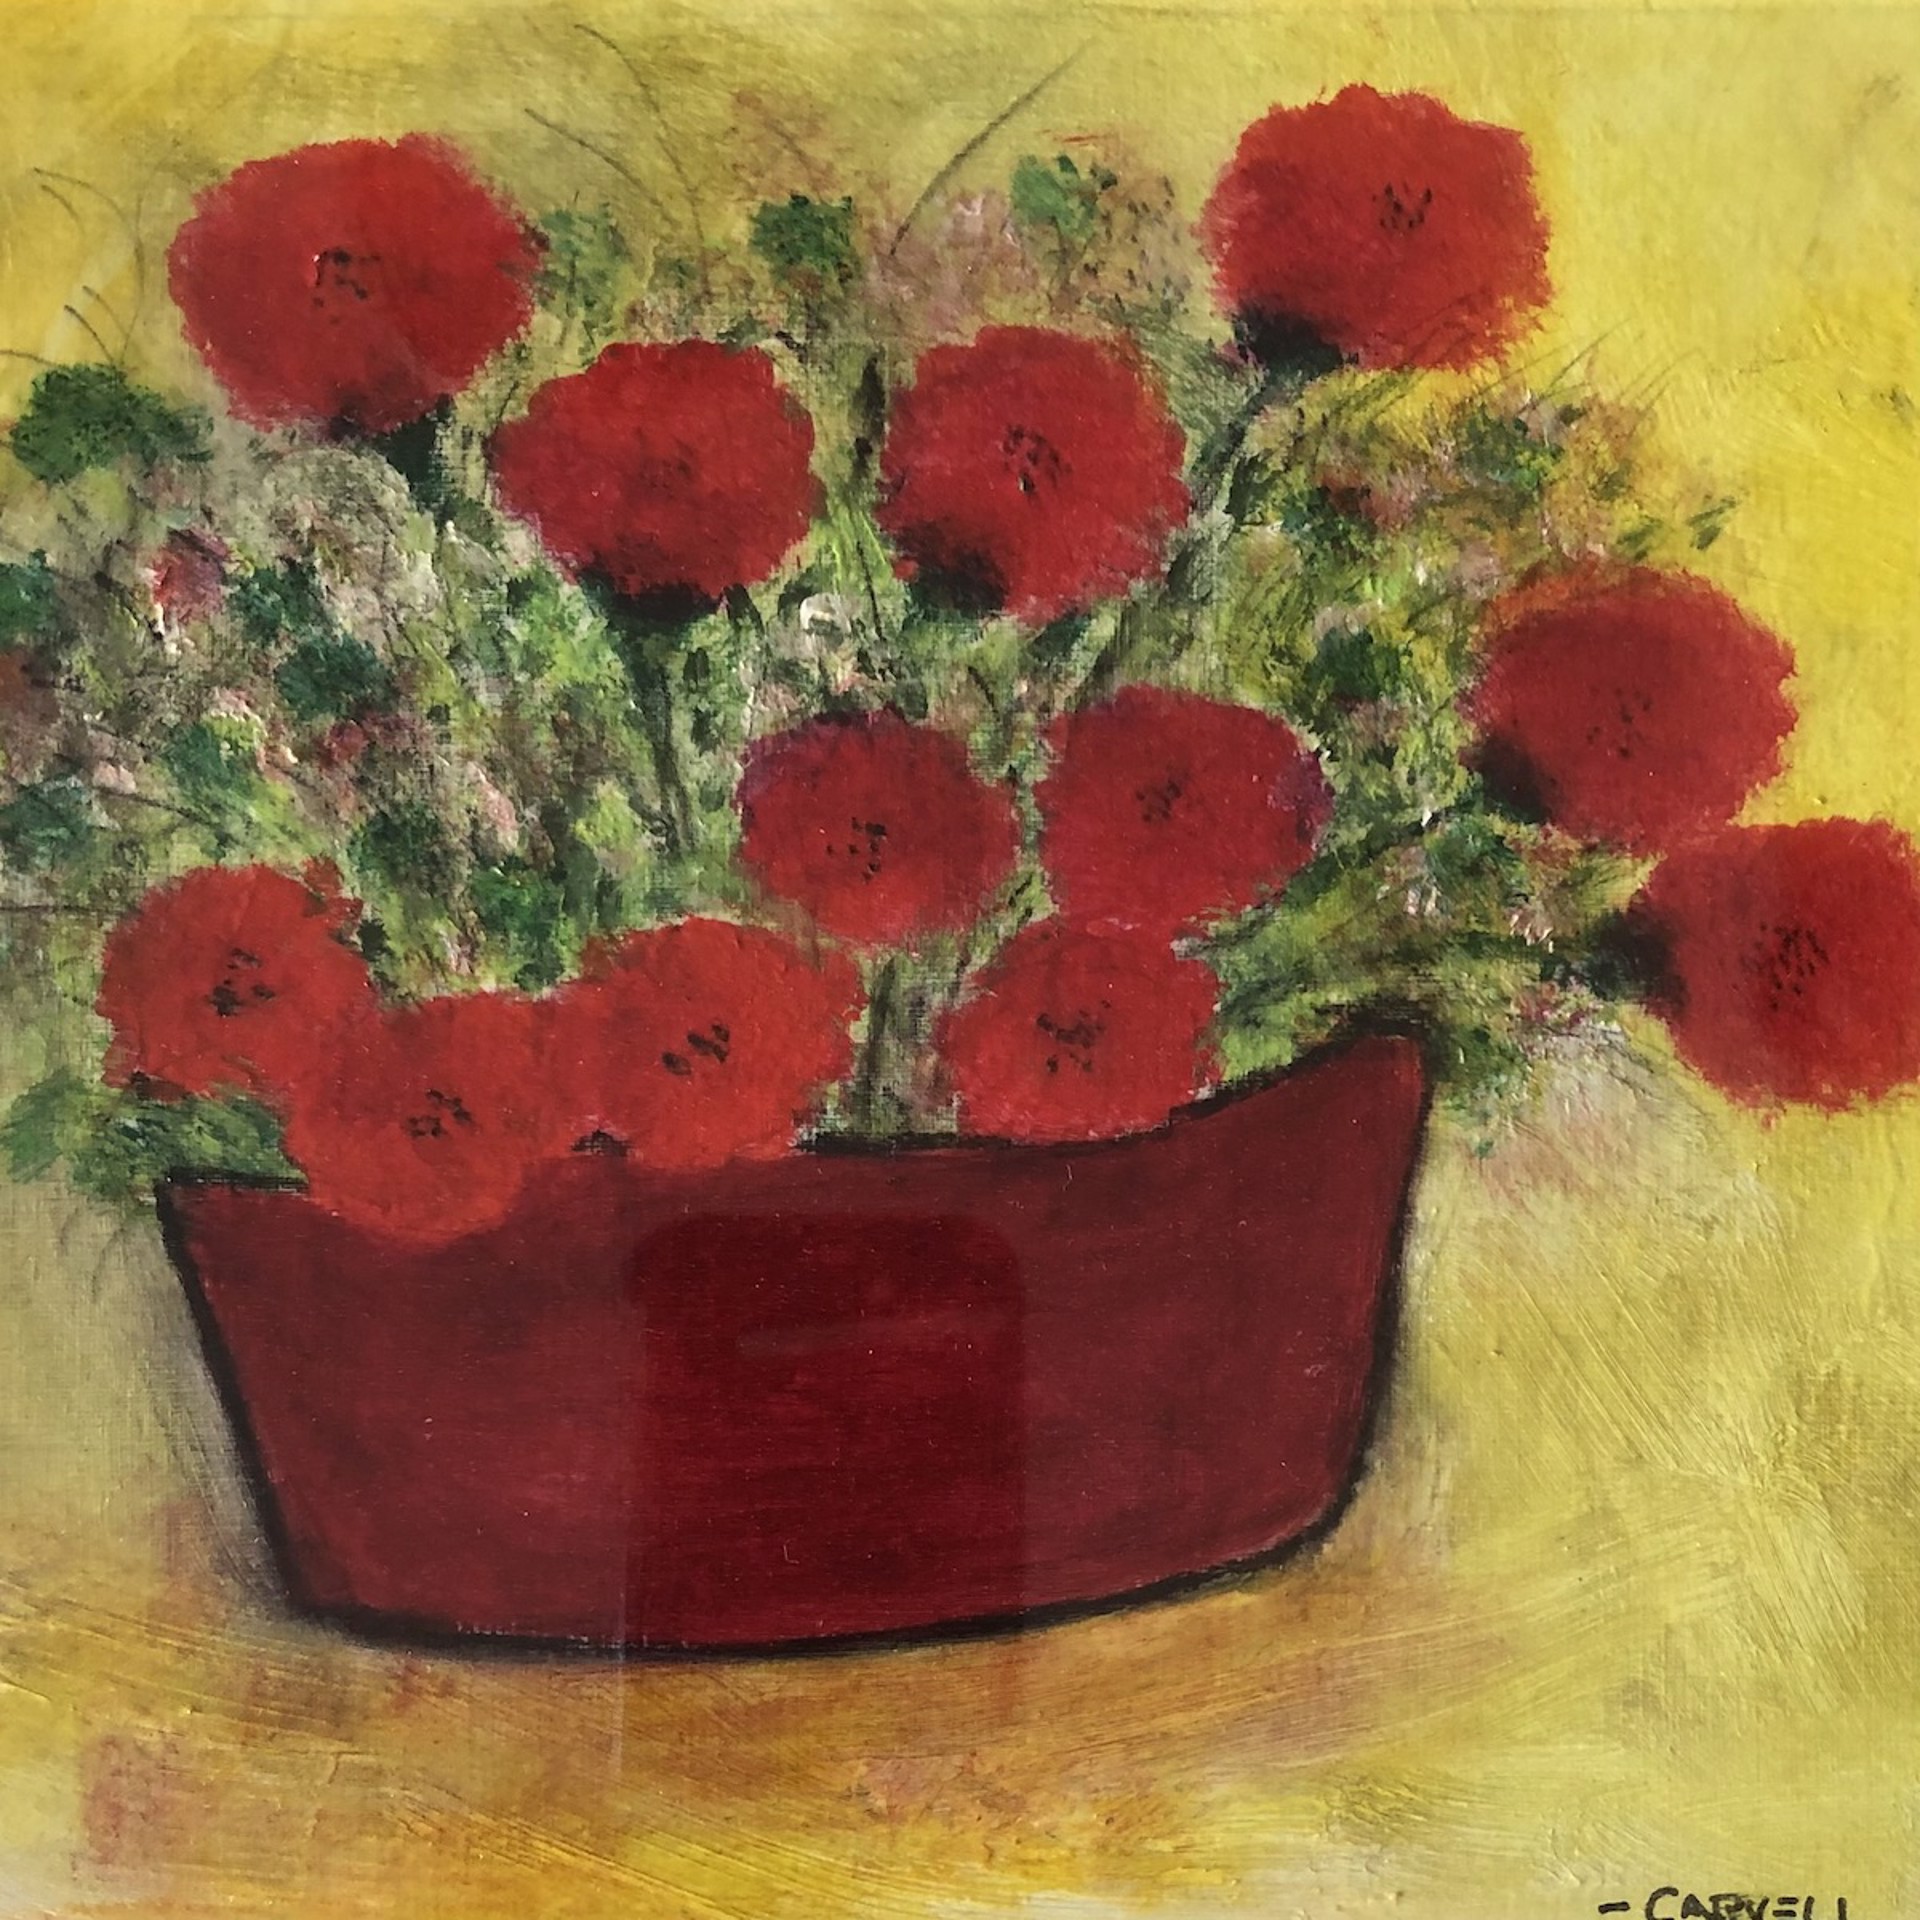 Crimson Ikebana by Fred Carvell